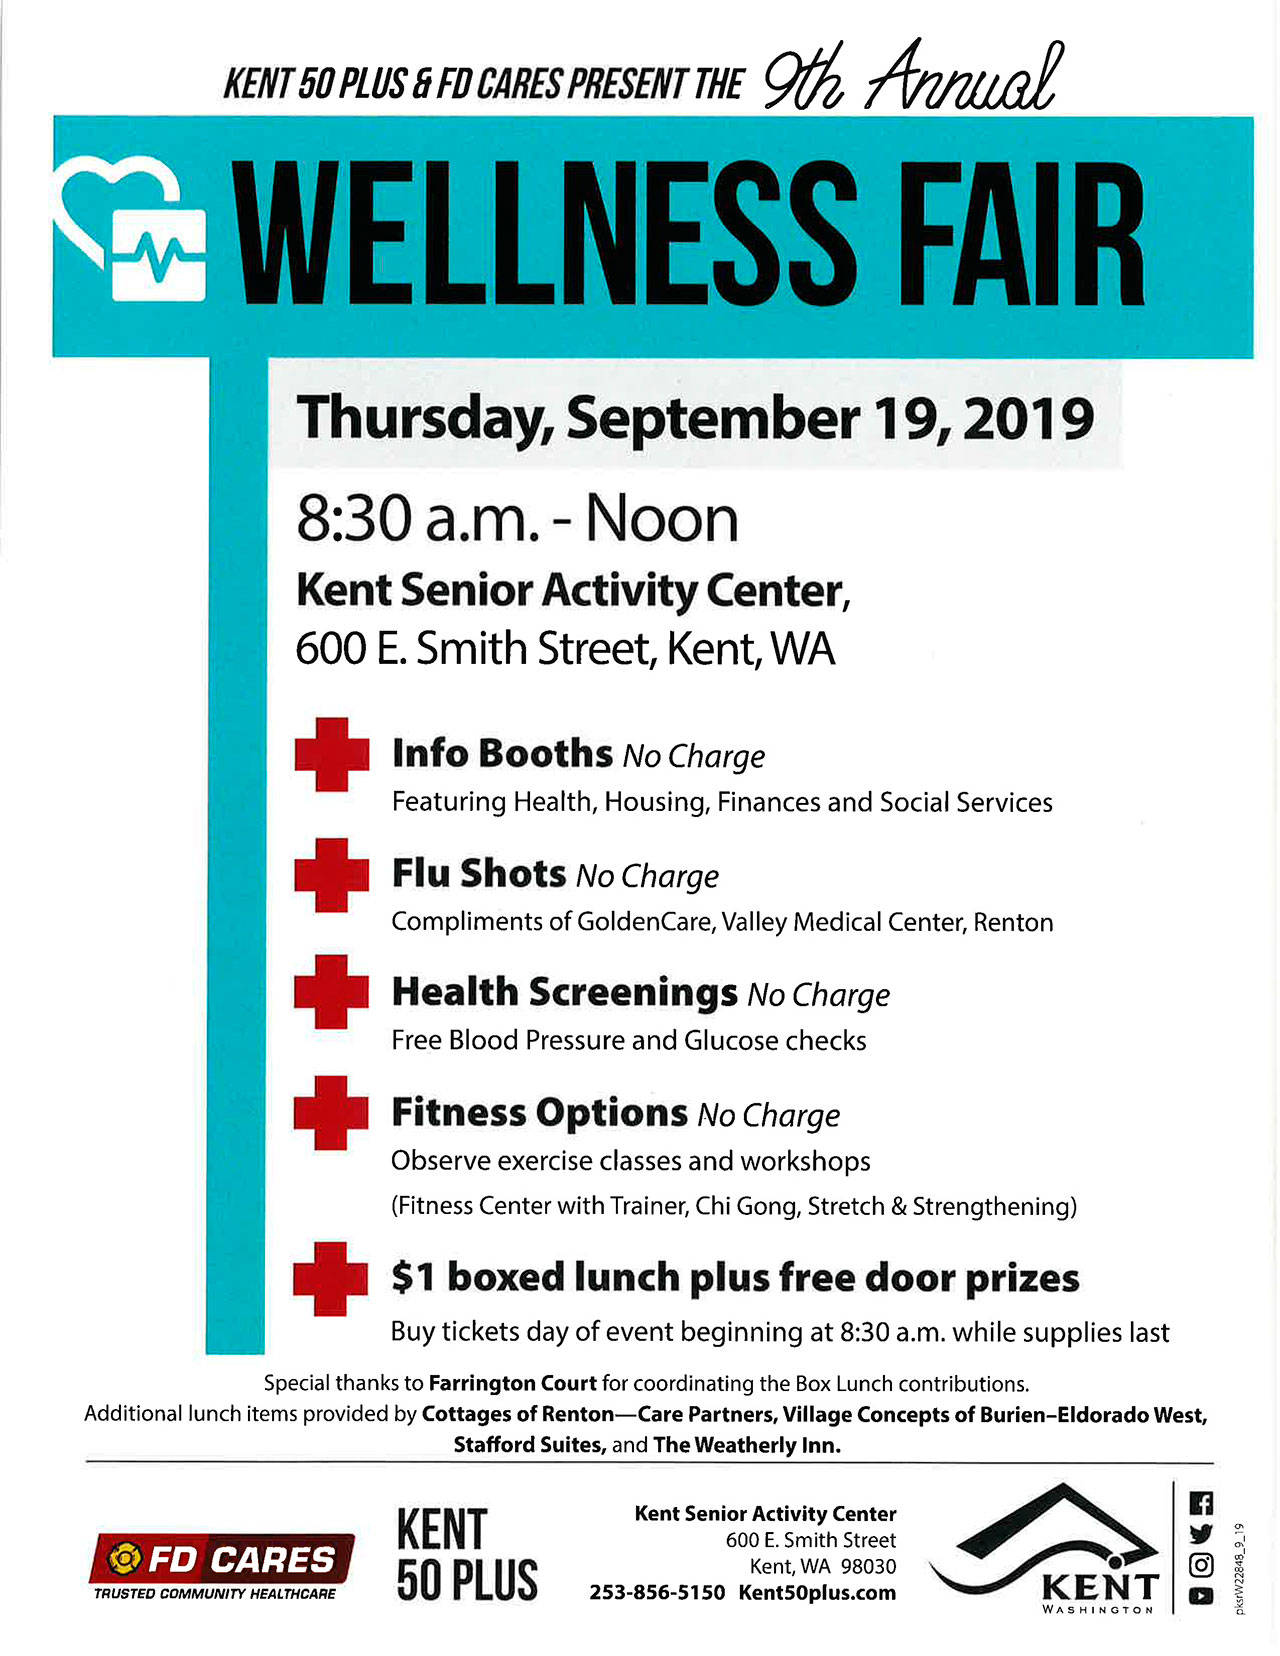 Kent Senior Center hosts Wellness Fair on Sept. 19